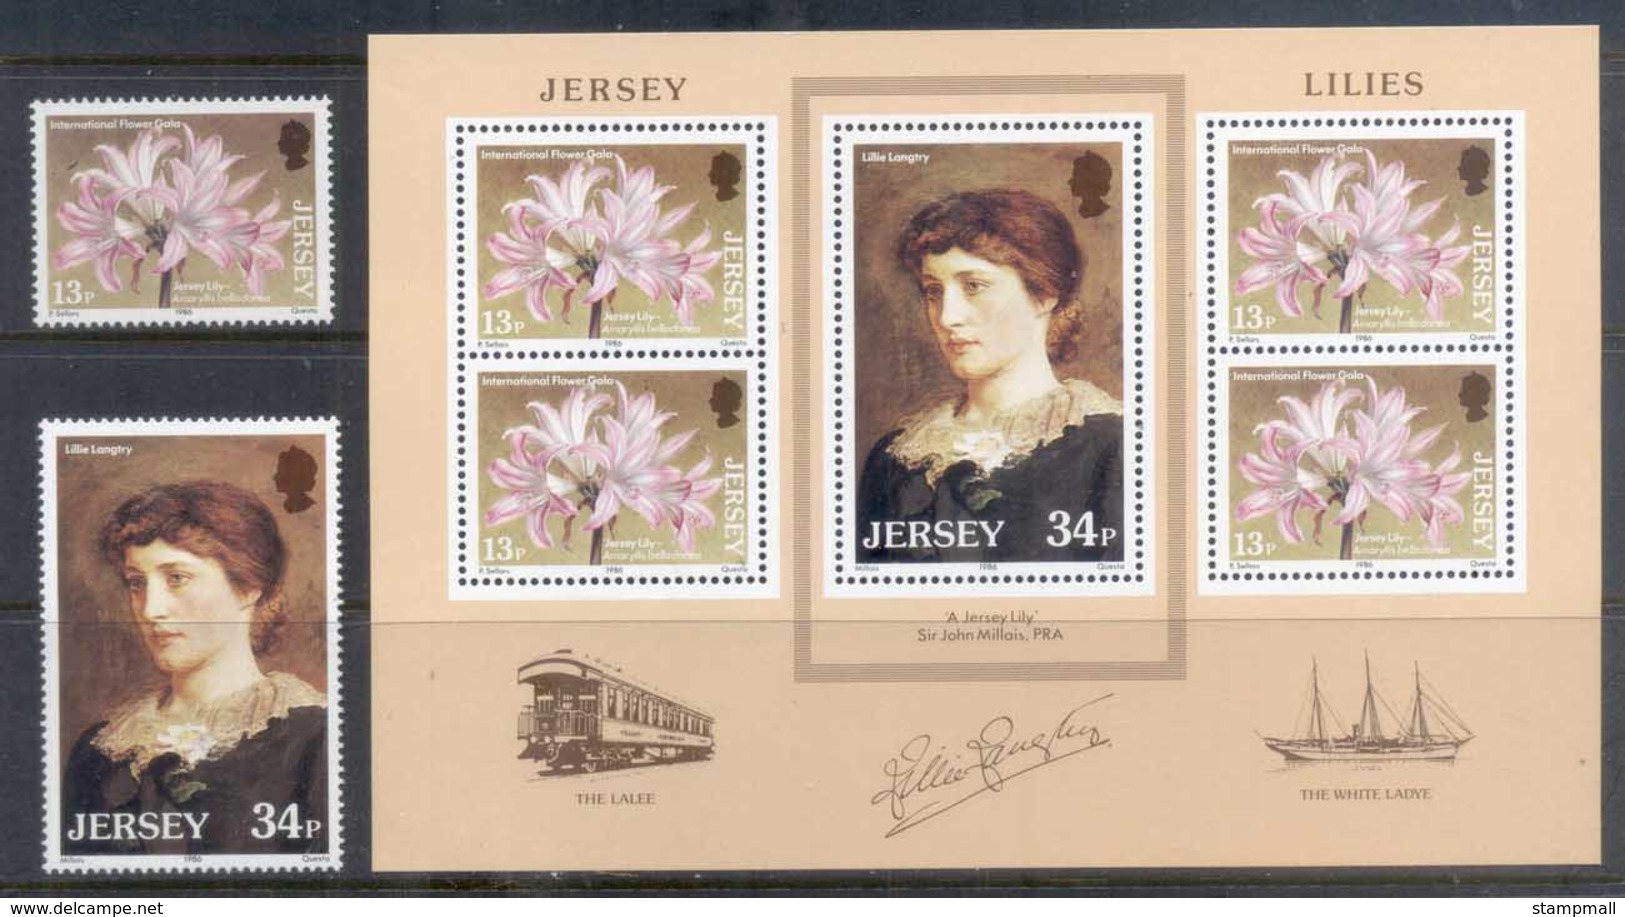 Jersey 1986 Lillie Langtree, Flower Gala + MS MUH - Jersey